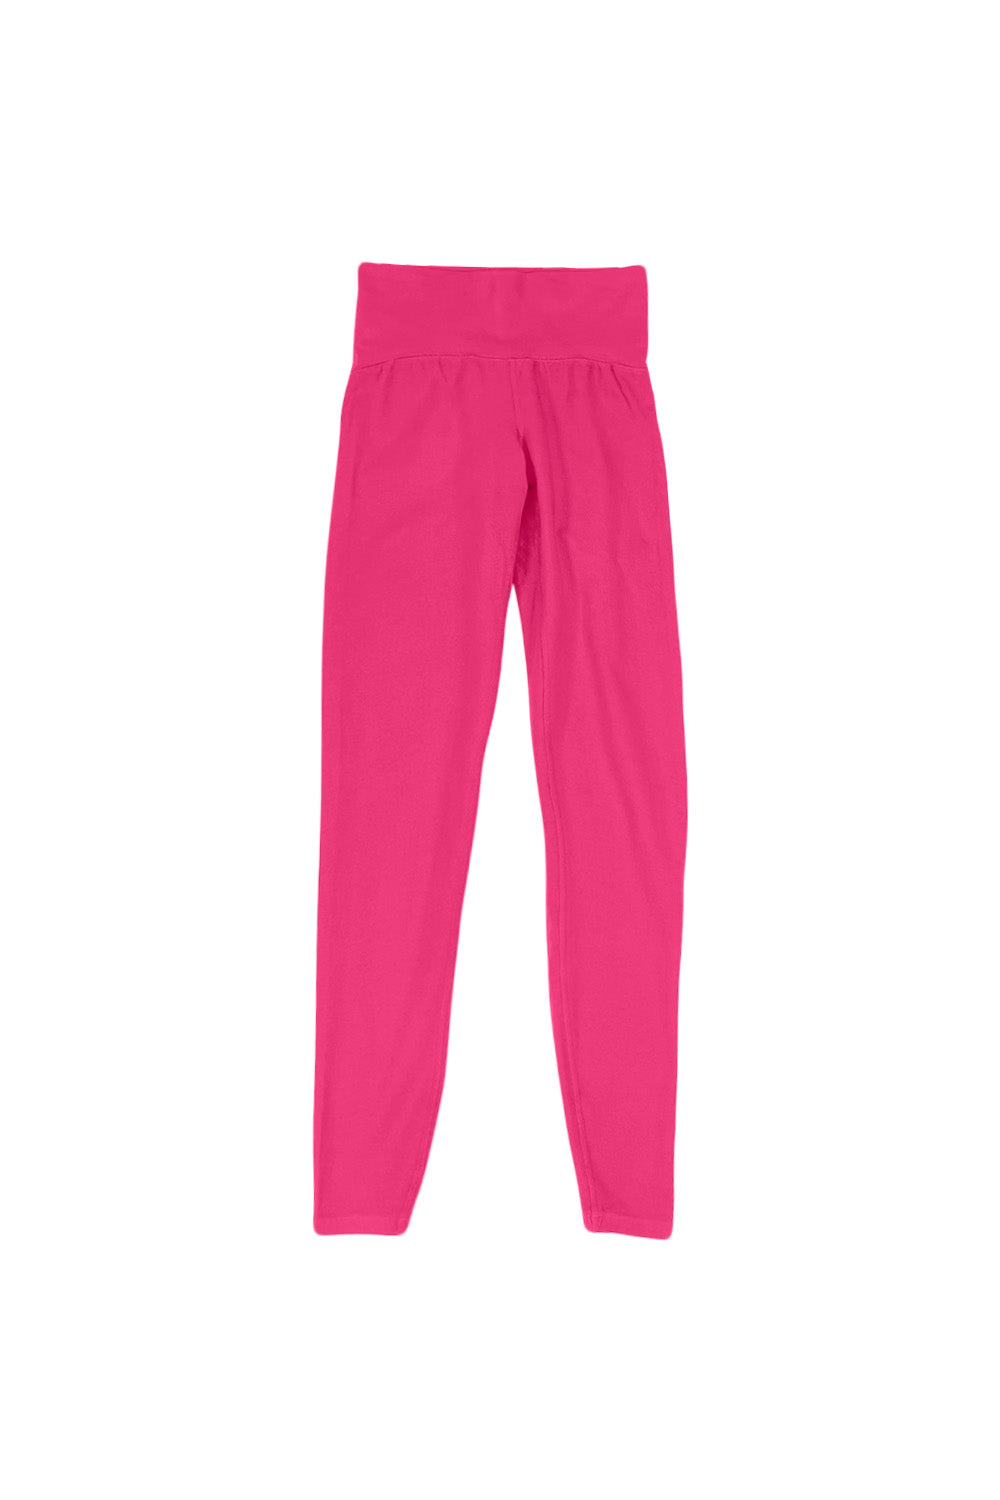 Orosi Leggings - Mid Rise | Jungmaven Hemp Clothing & Accessories / Color: Pink Grapefruit